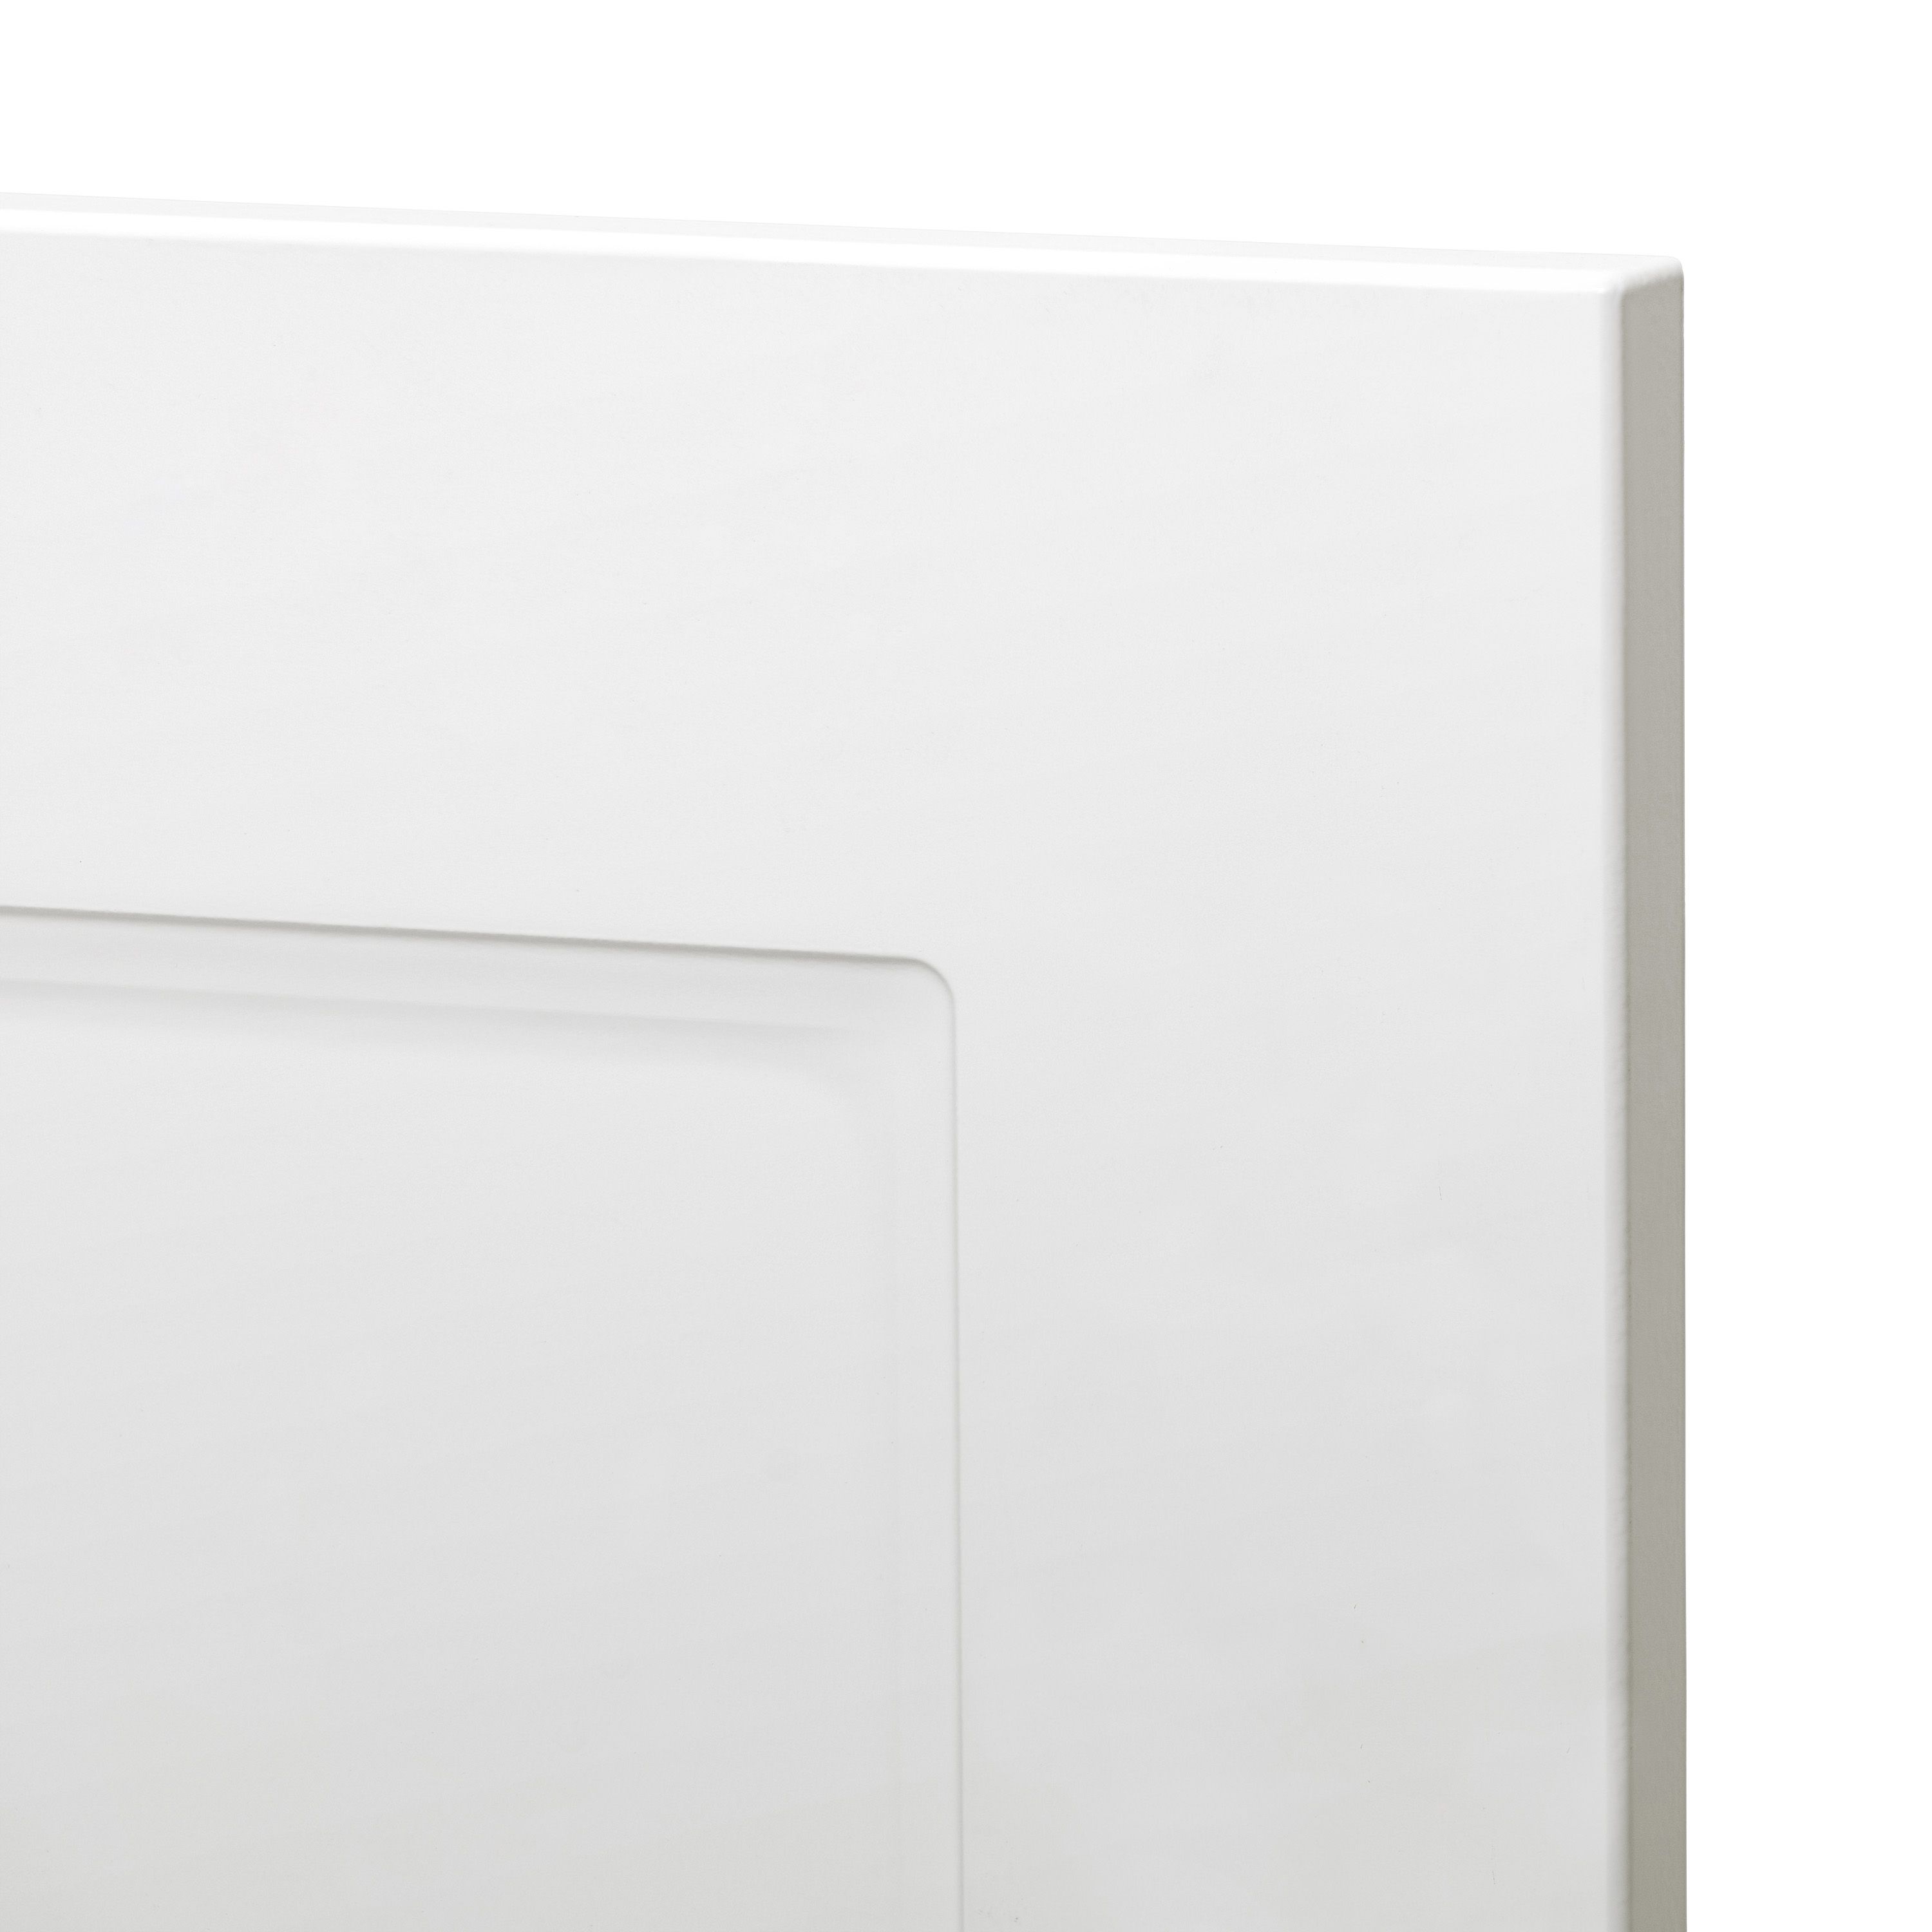 GoodHome Artemisia Matt white classic shaker Tall appliance Cabinet door (W)600mm (H)867mm (T)18mm